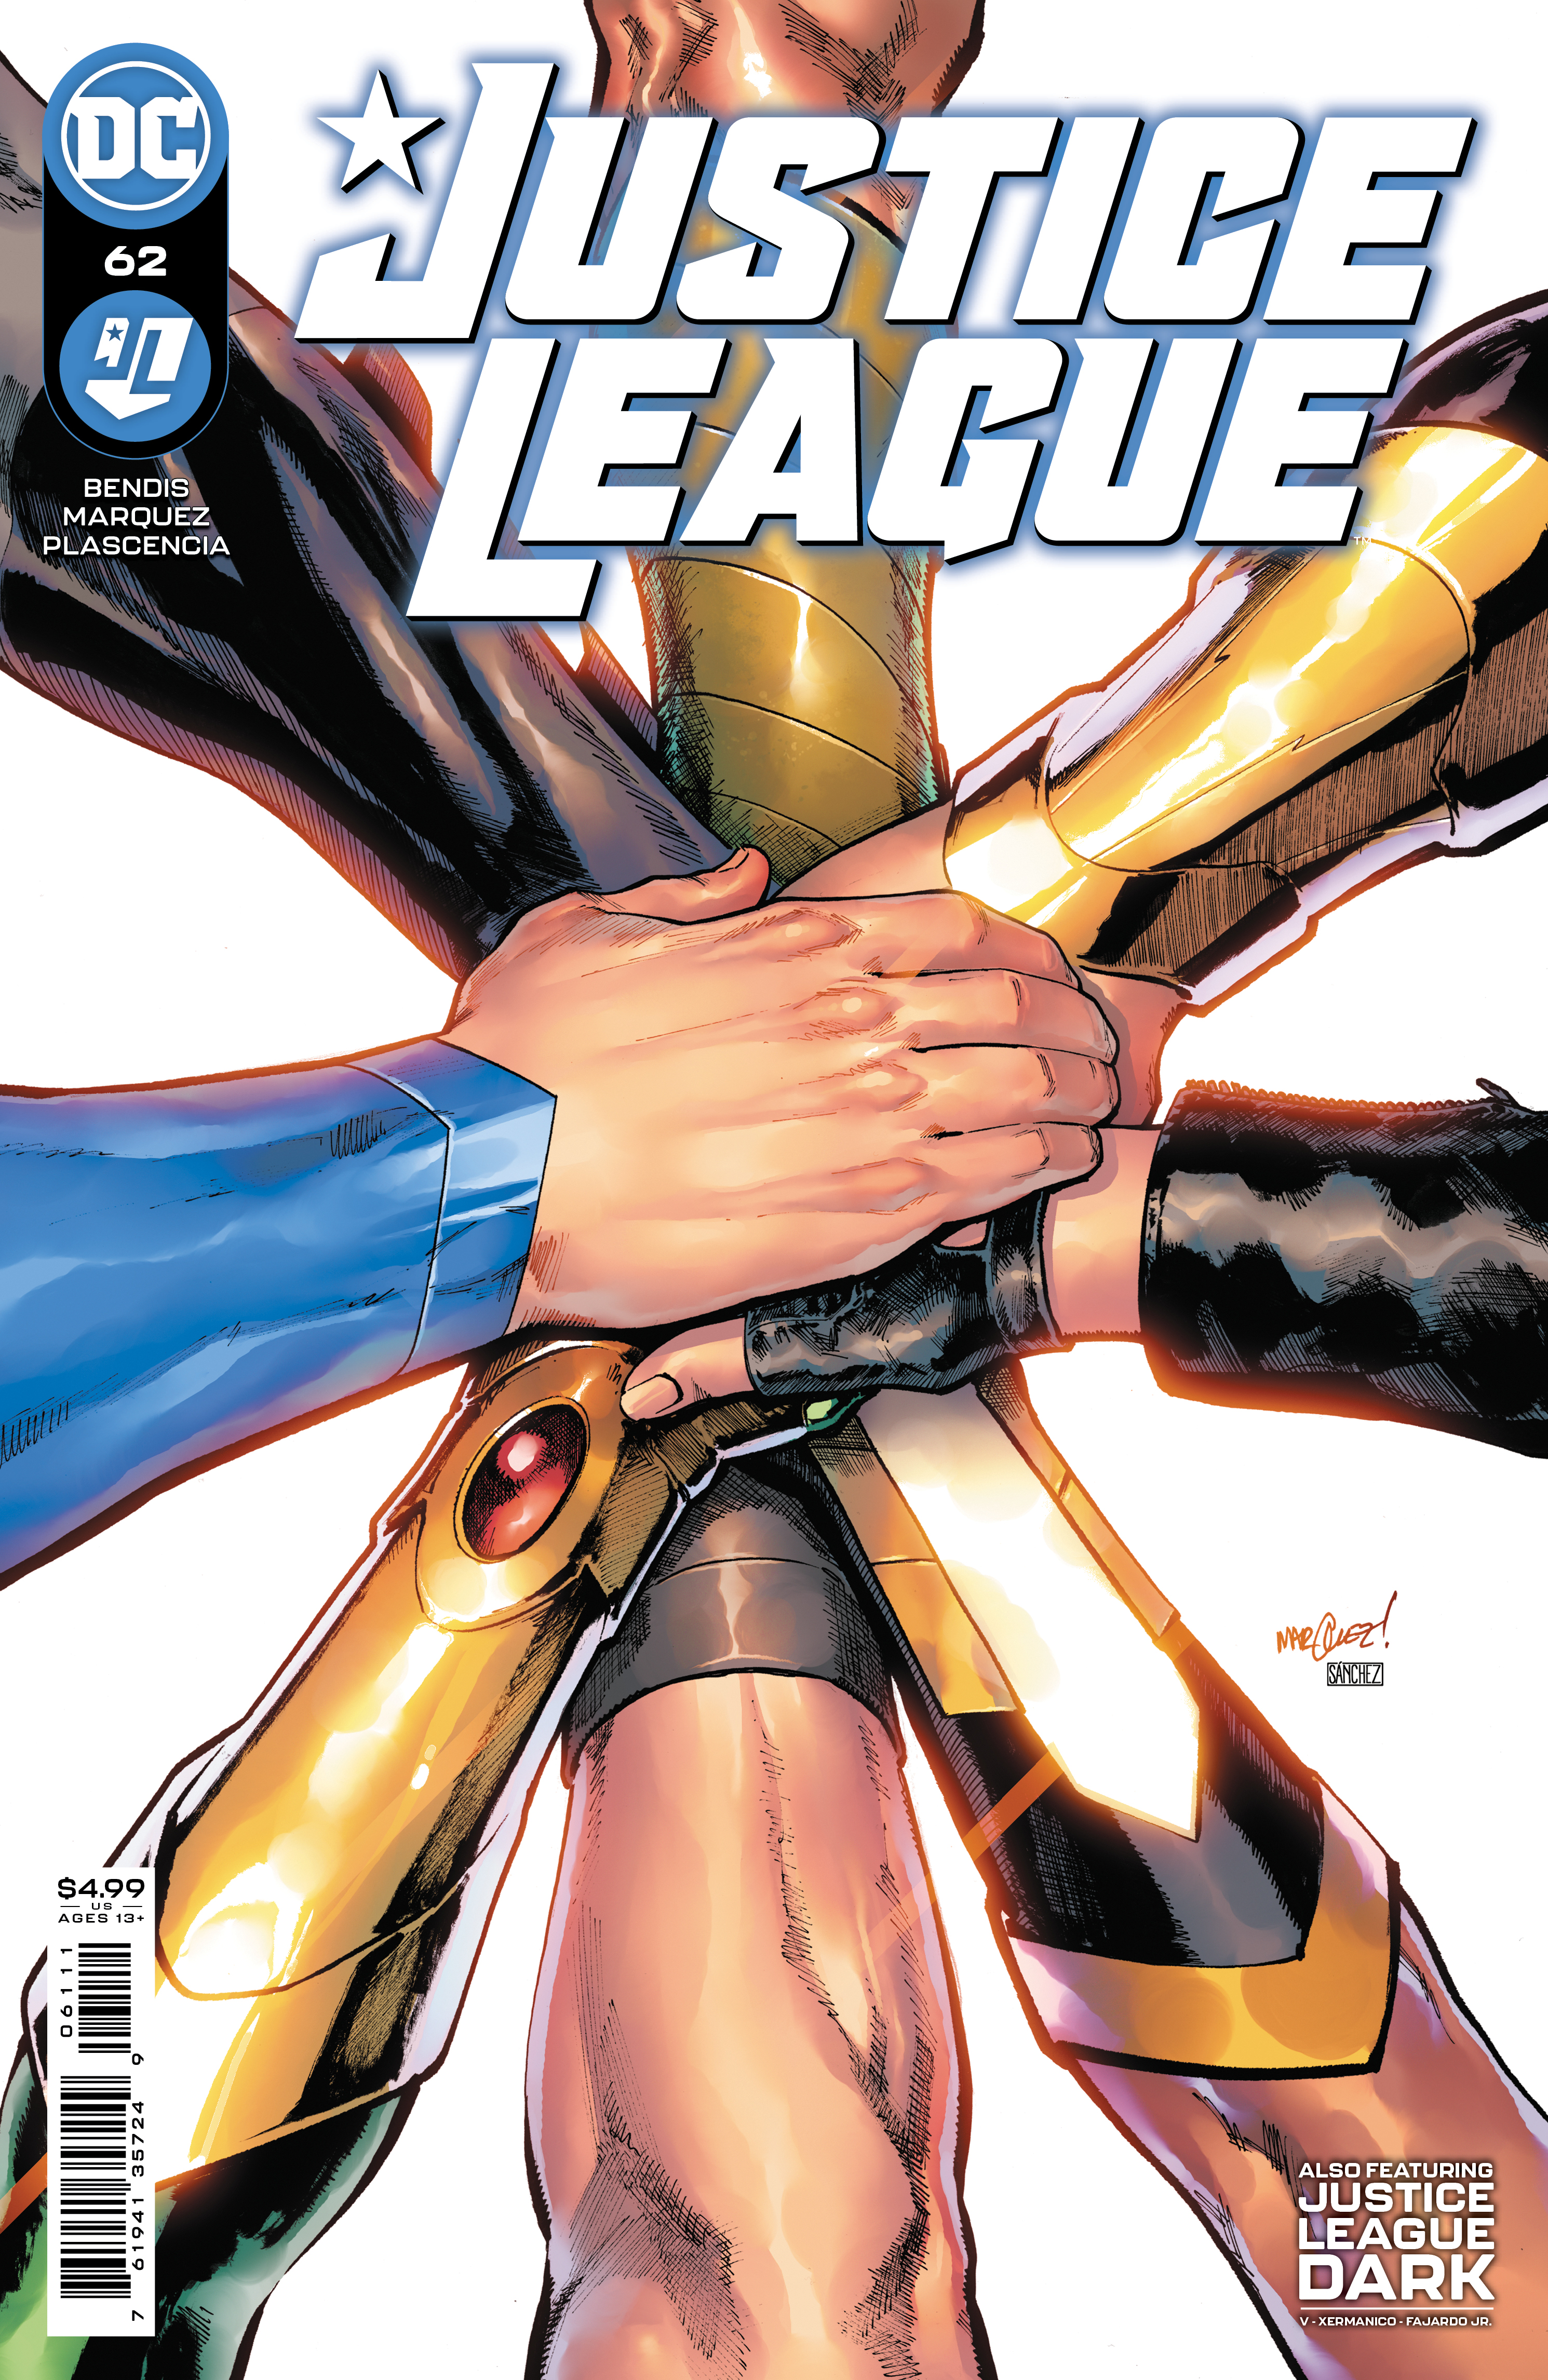 Justice League #62 Cover A David Marquez (2018)